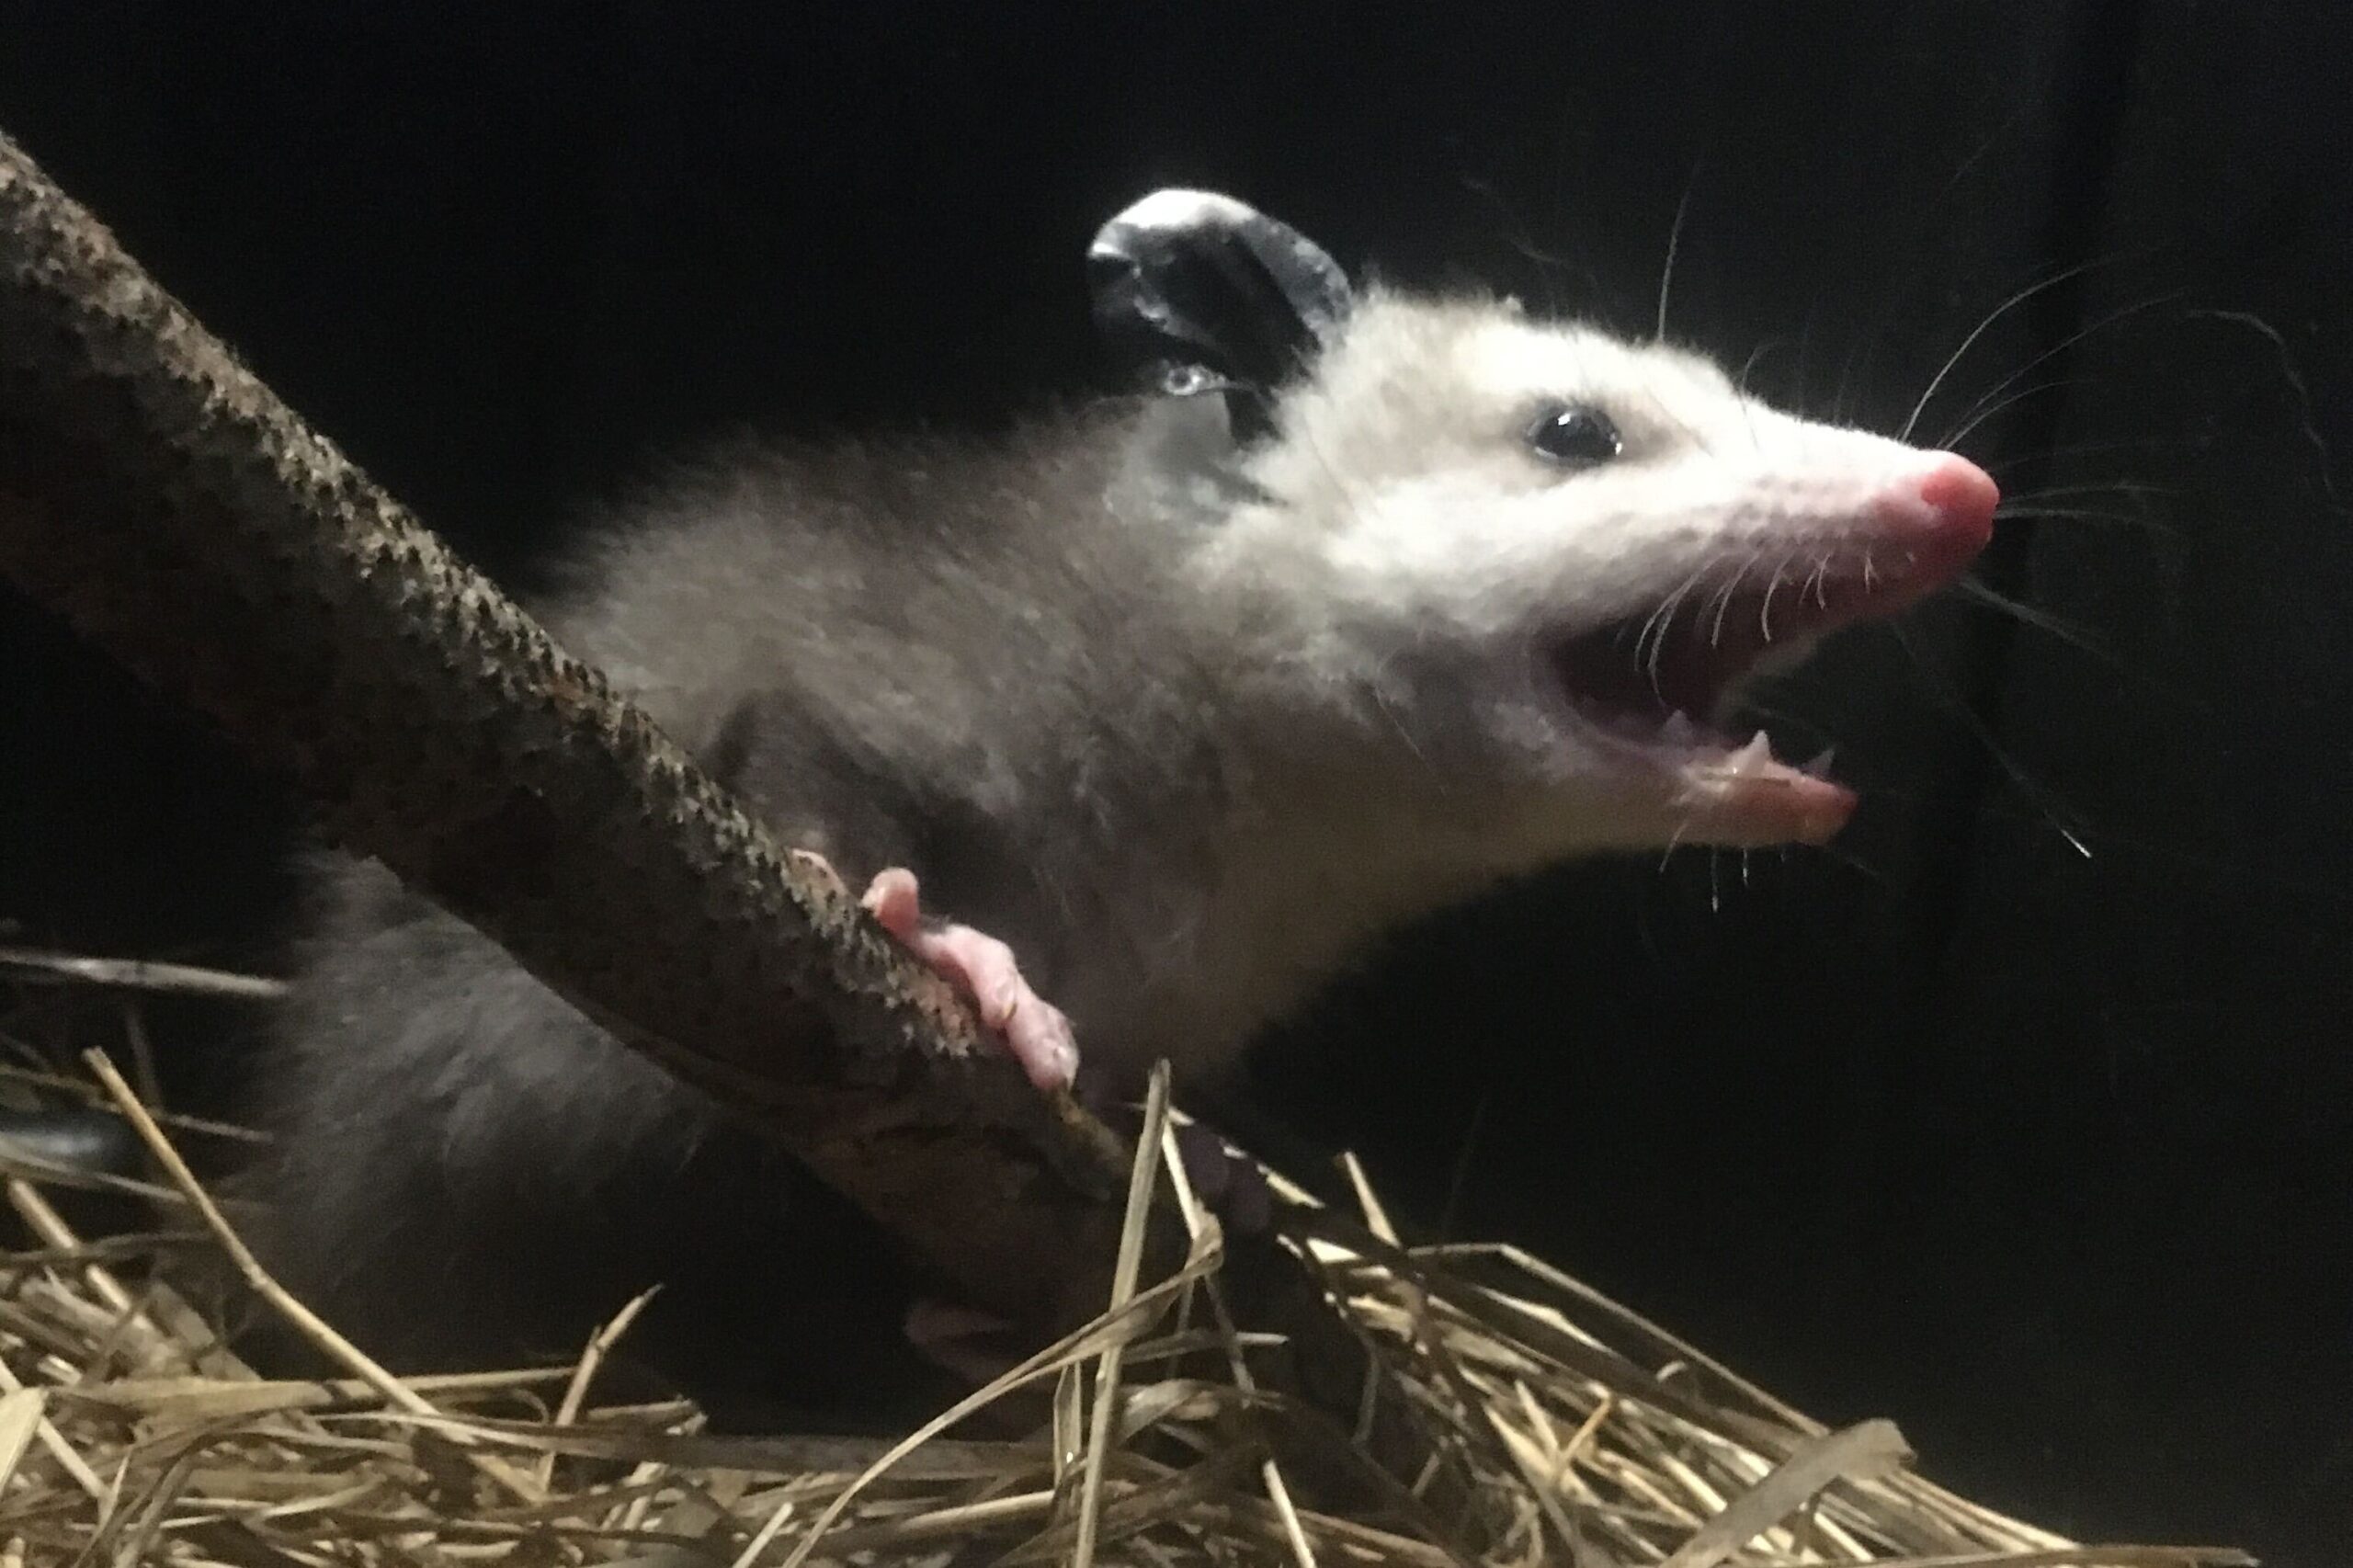 a opossum